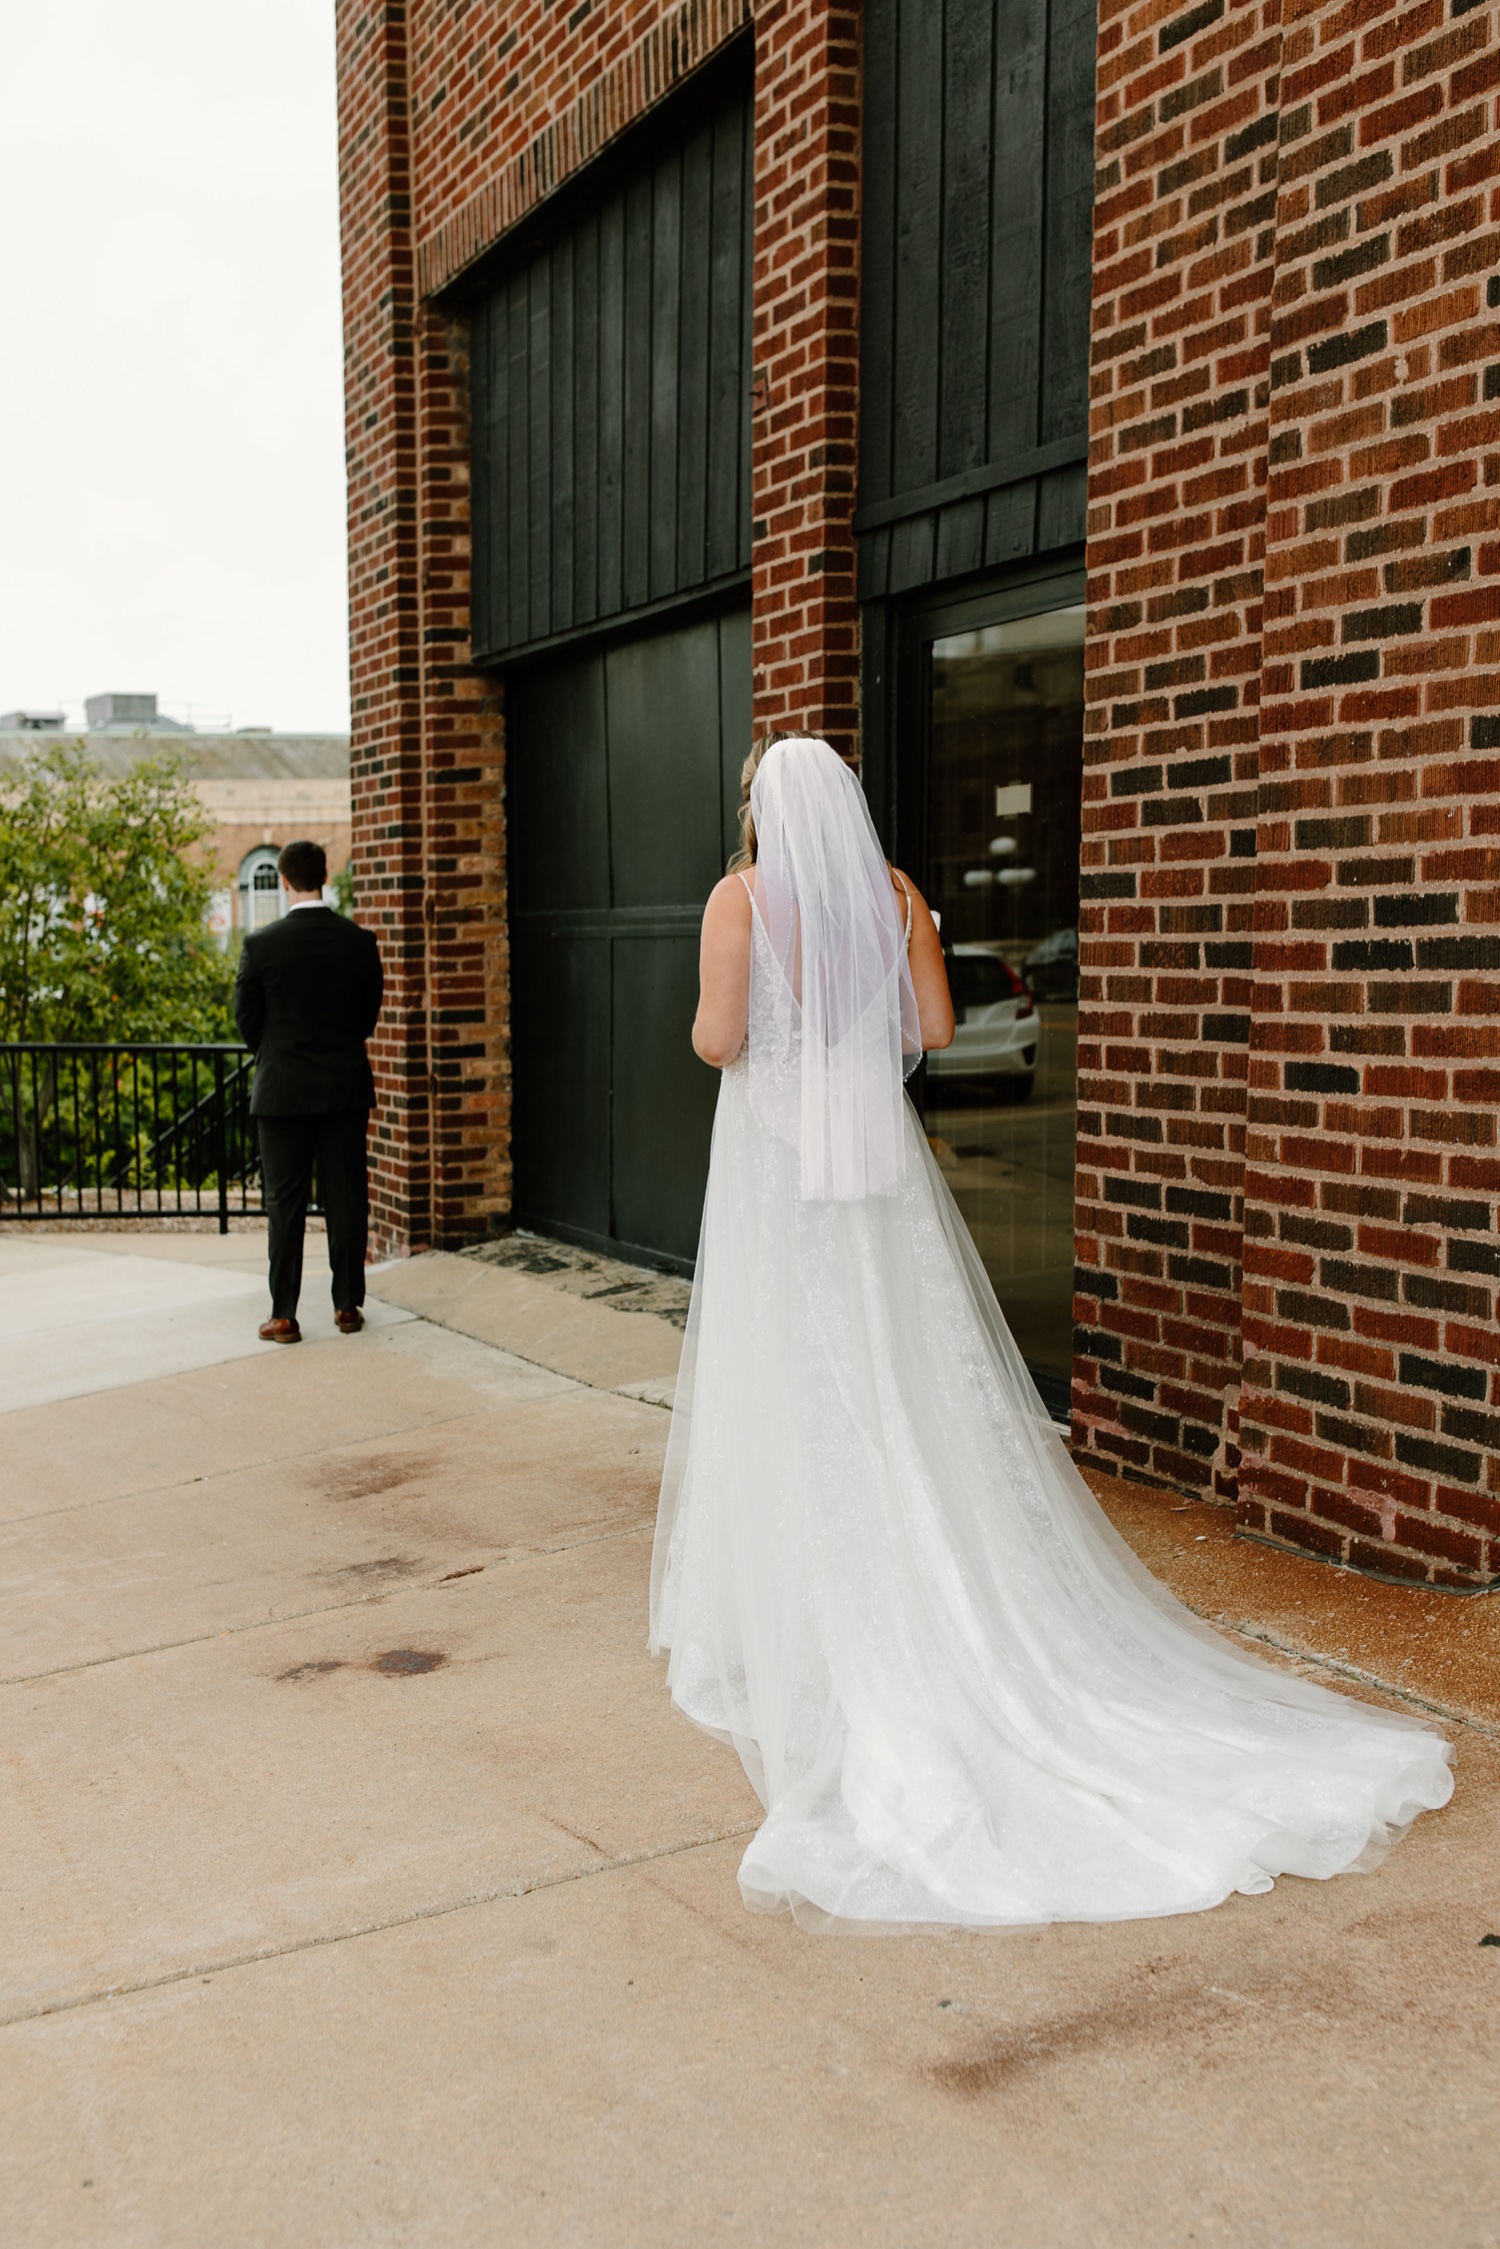 Society 57 Wedding | Chicago wedding photographer